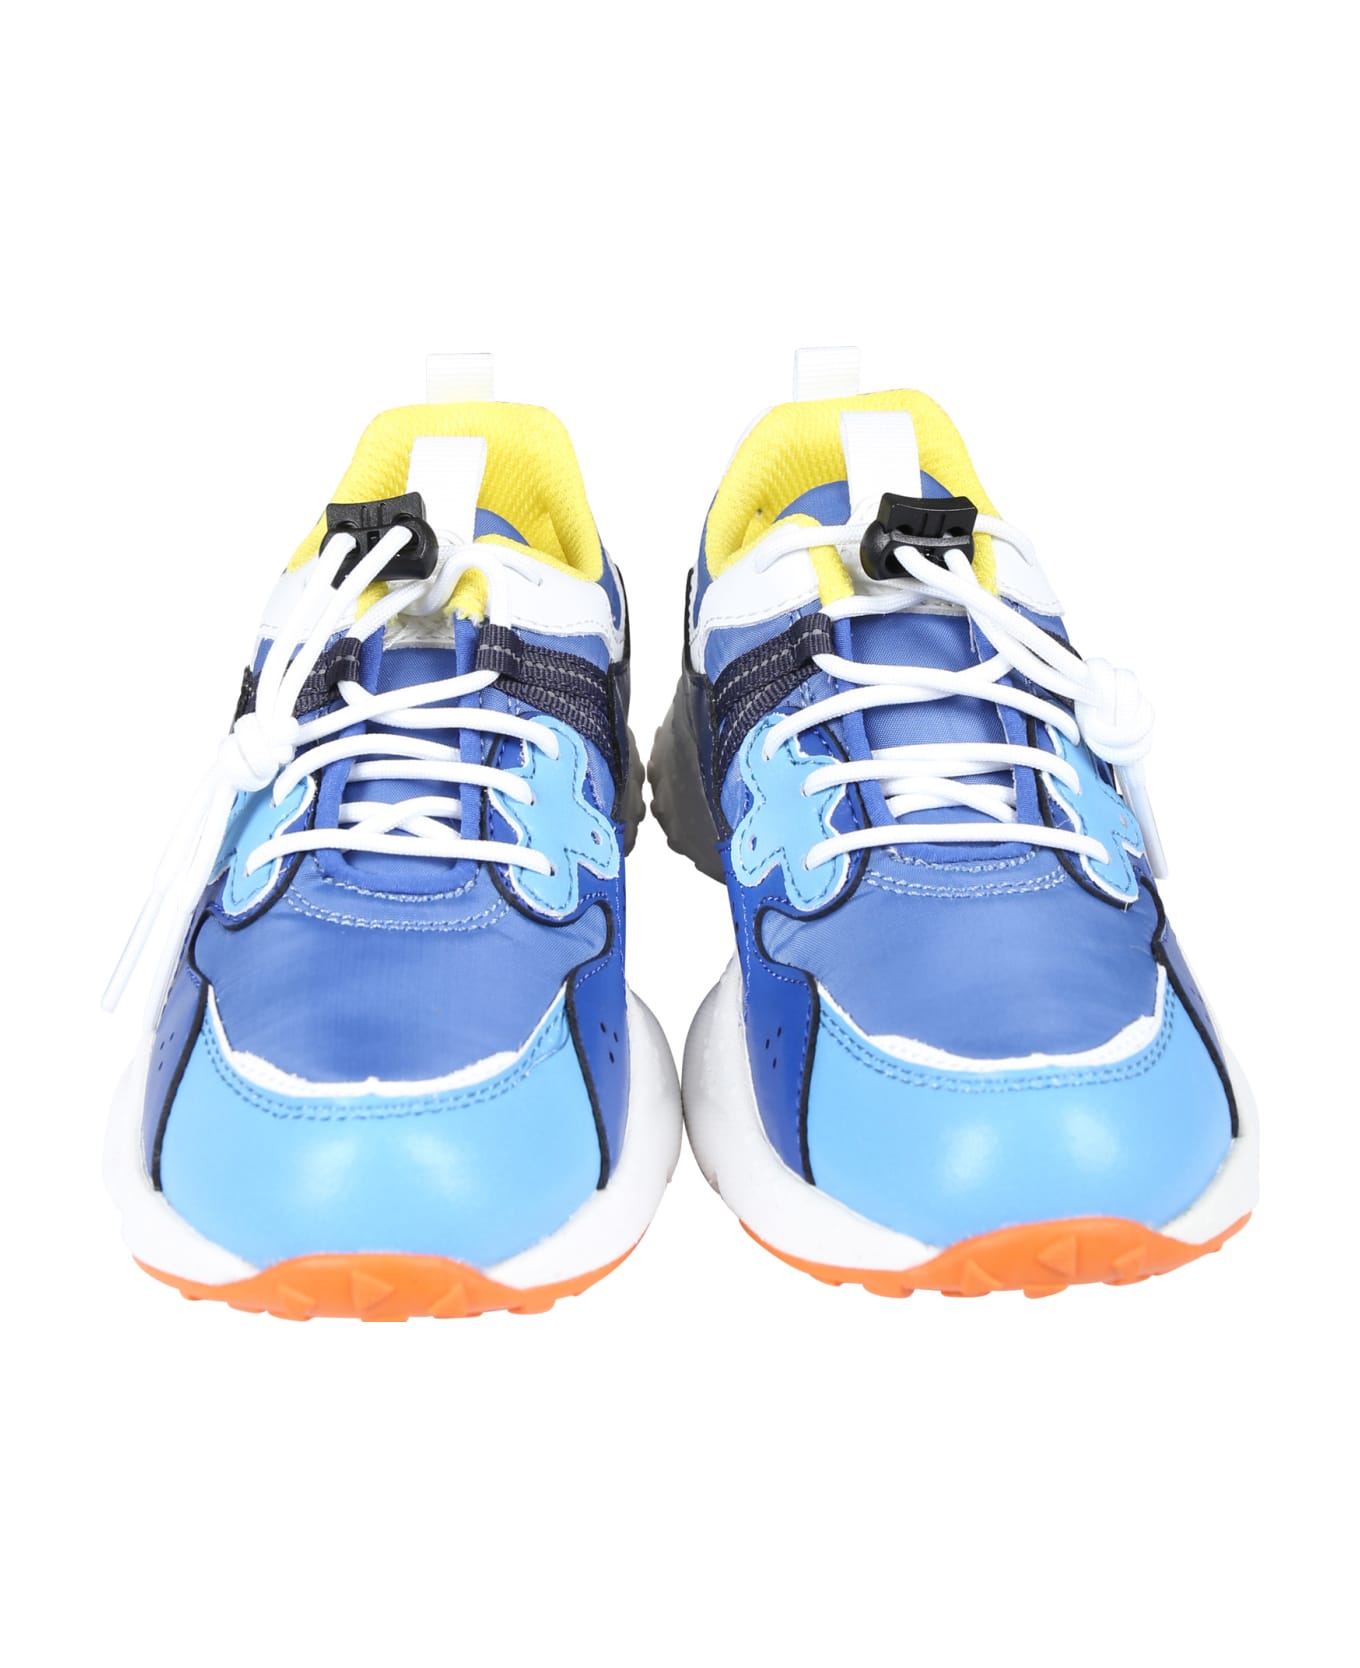 Flower Mountain Light Blue Low Yamano Sneakers For Boy - Light Blue シューズ